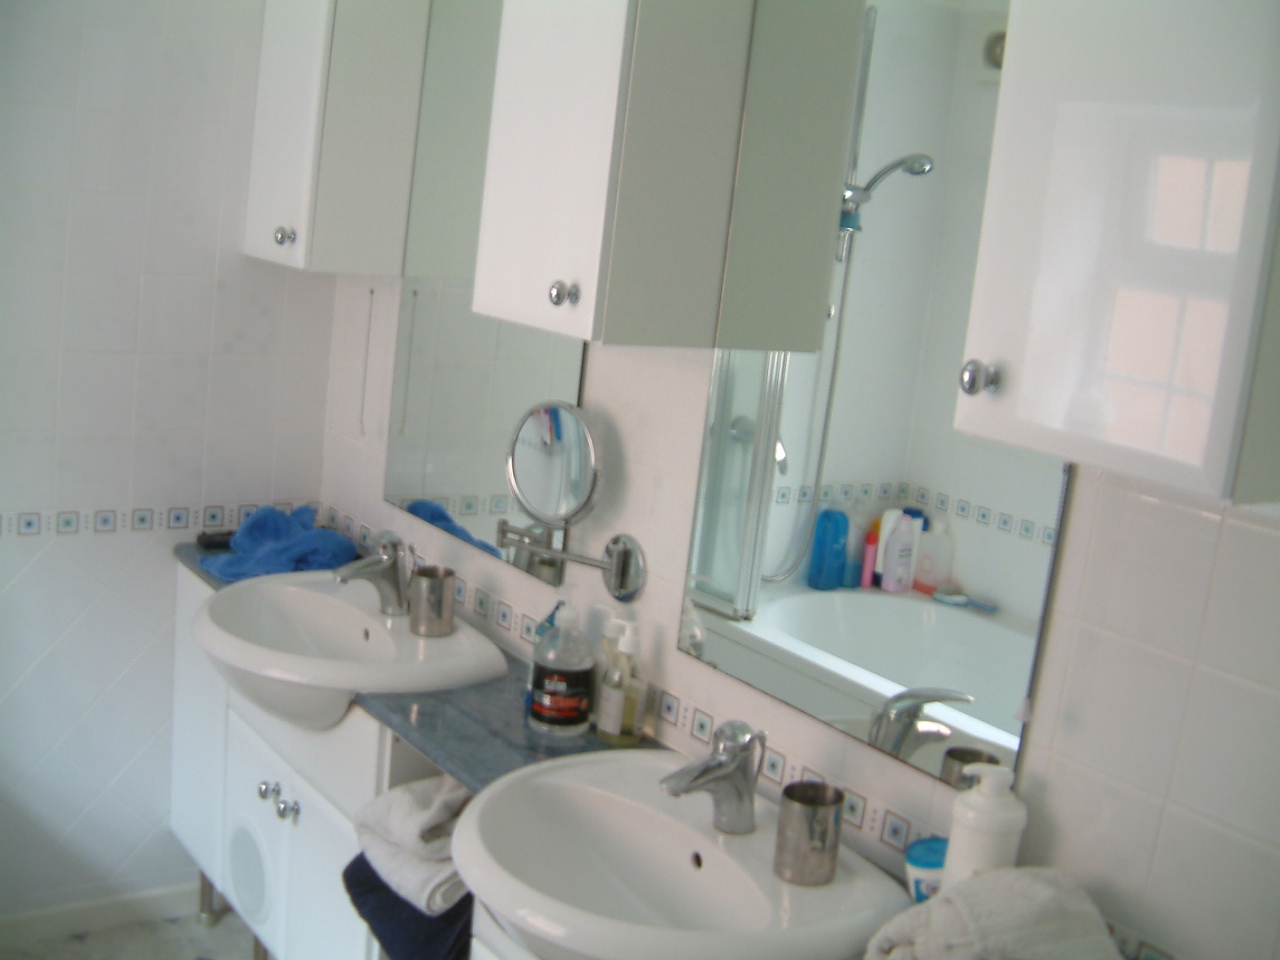 handyman in Plymstock, Plymouth bathroom renovation 01